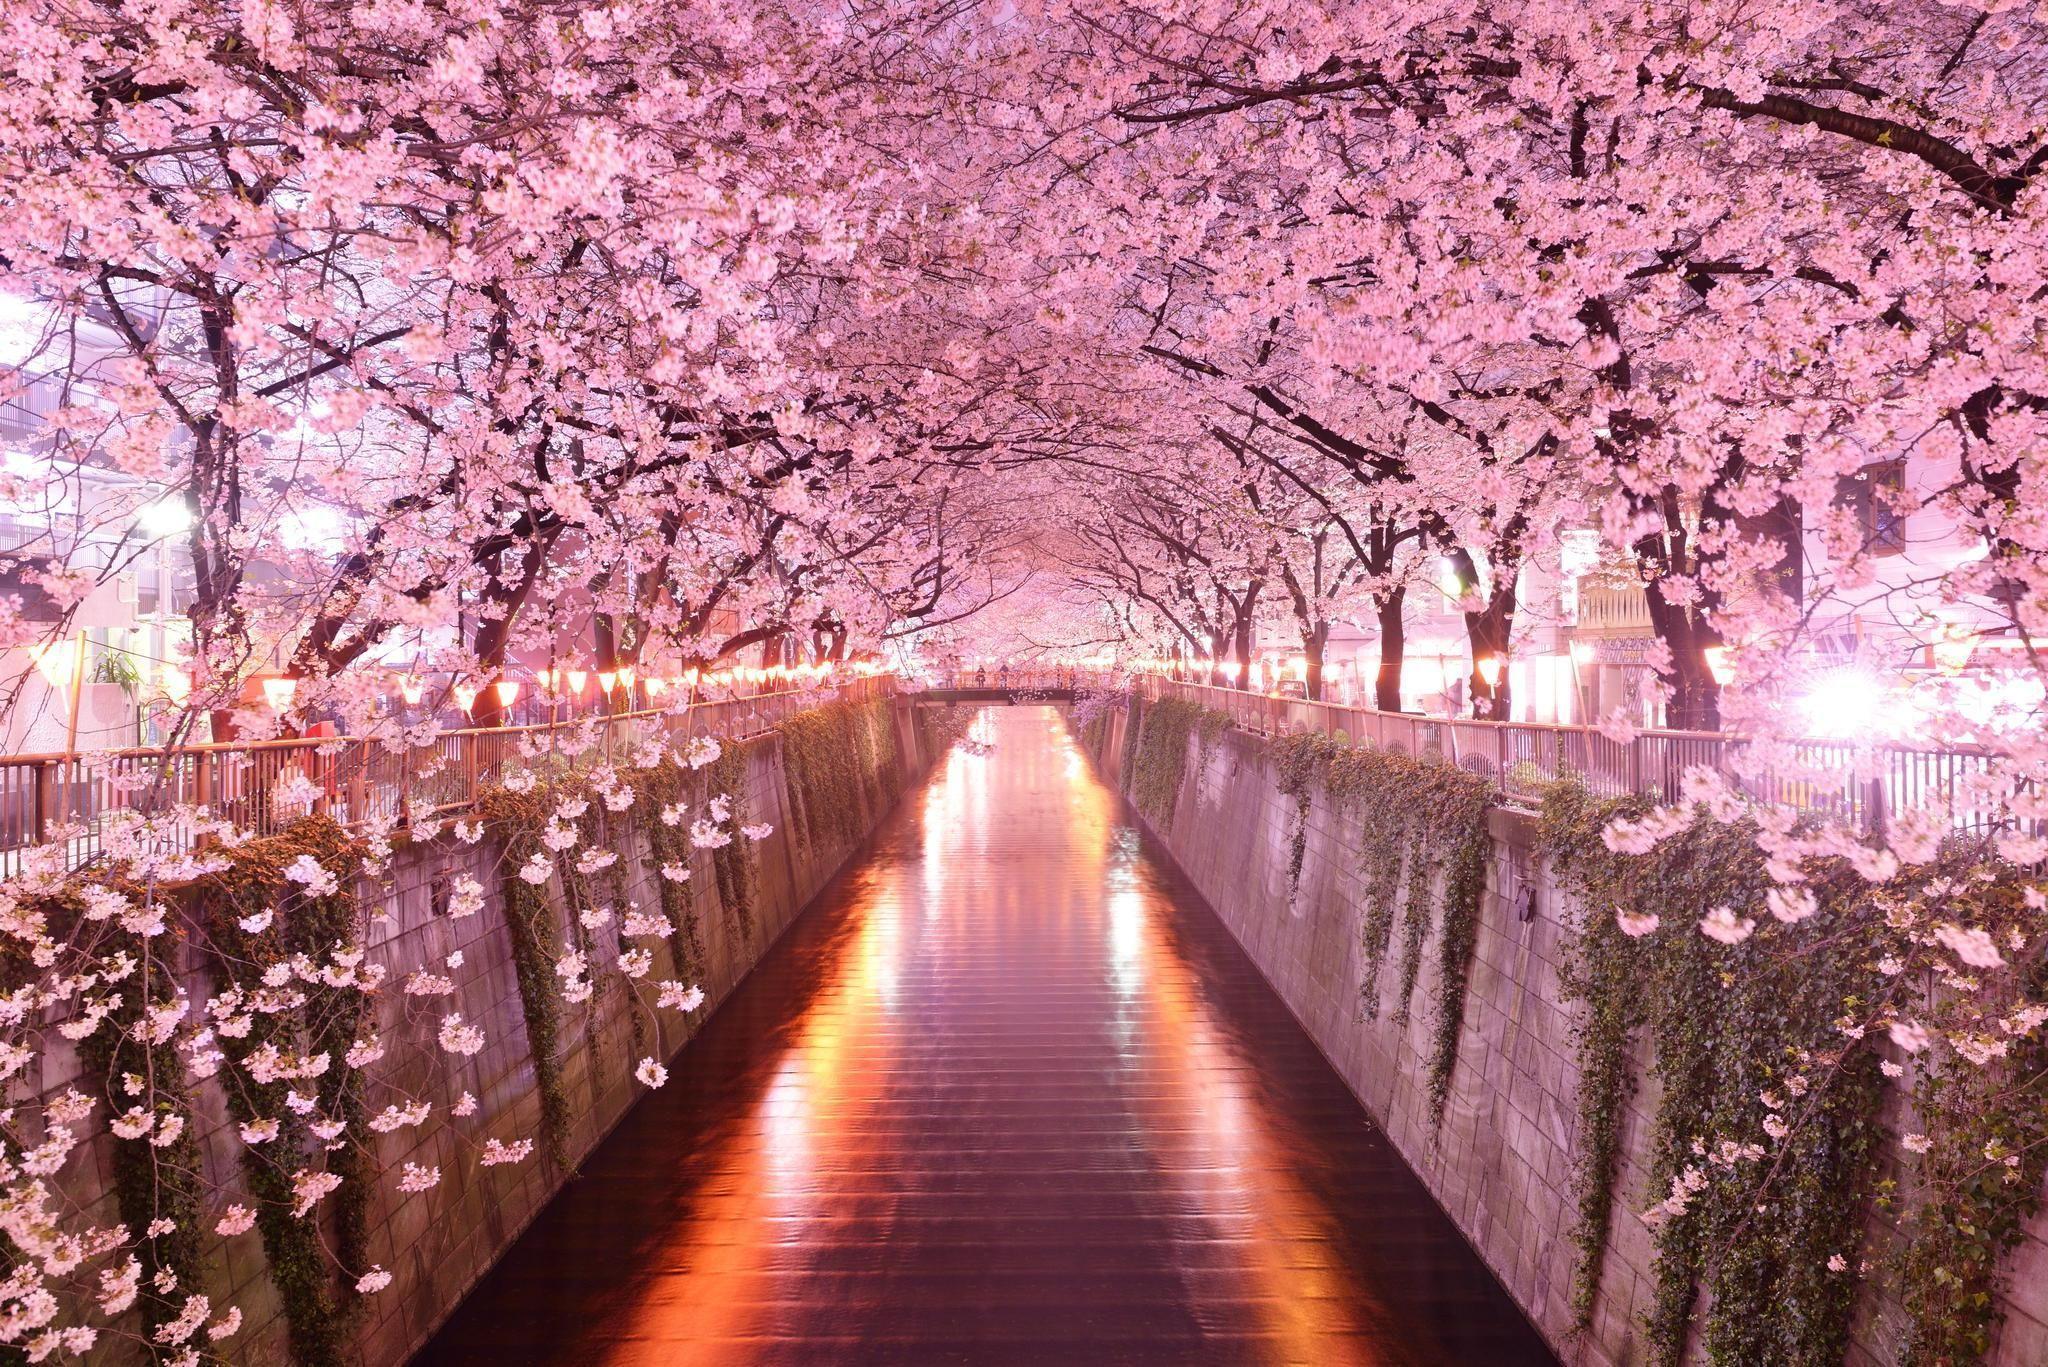 Sakura 4K Ultra HD Wallpapers - Top Free Sakura 4K Ultra HD Backgrounds